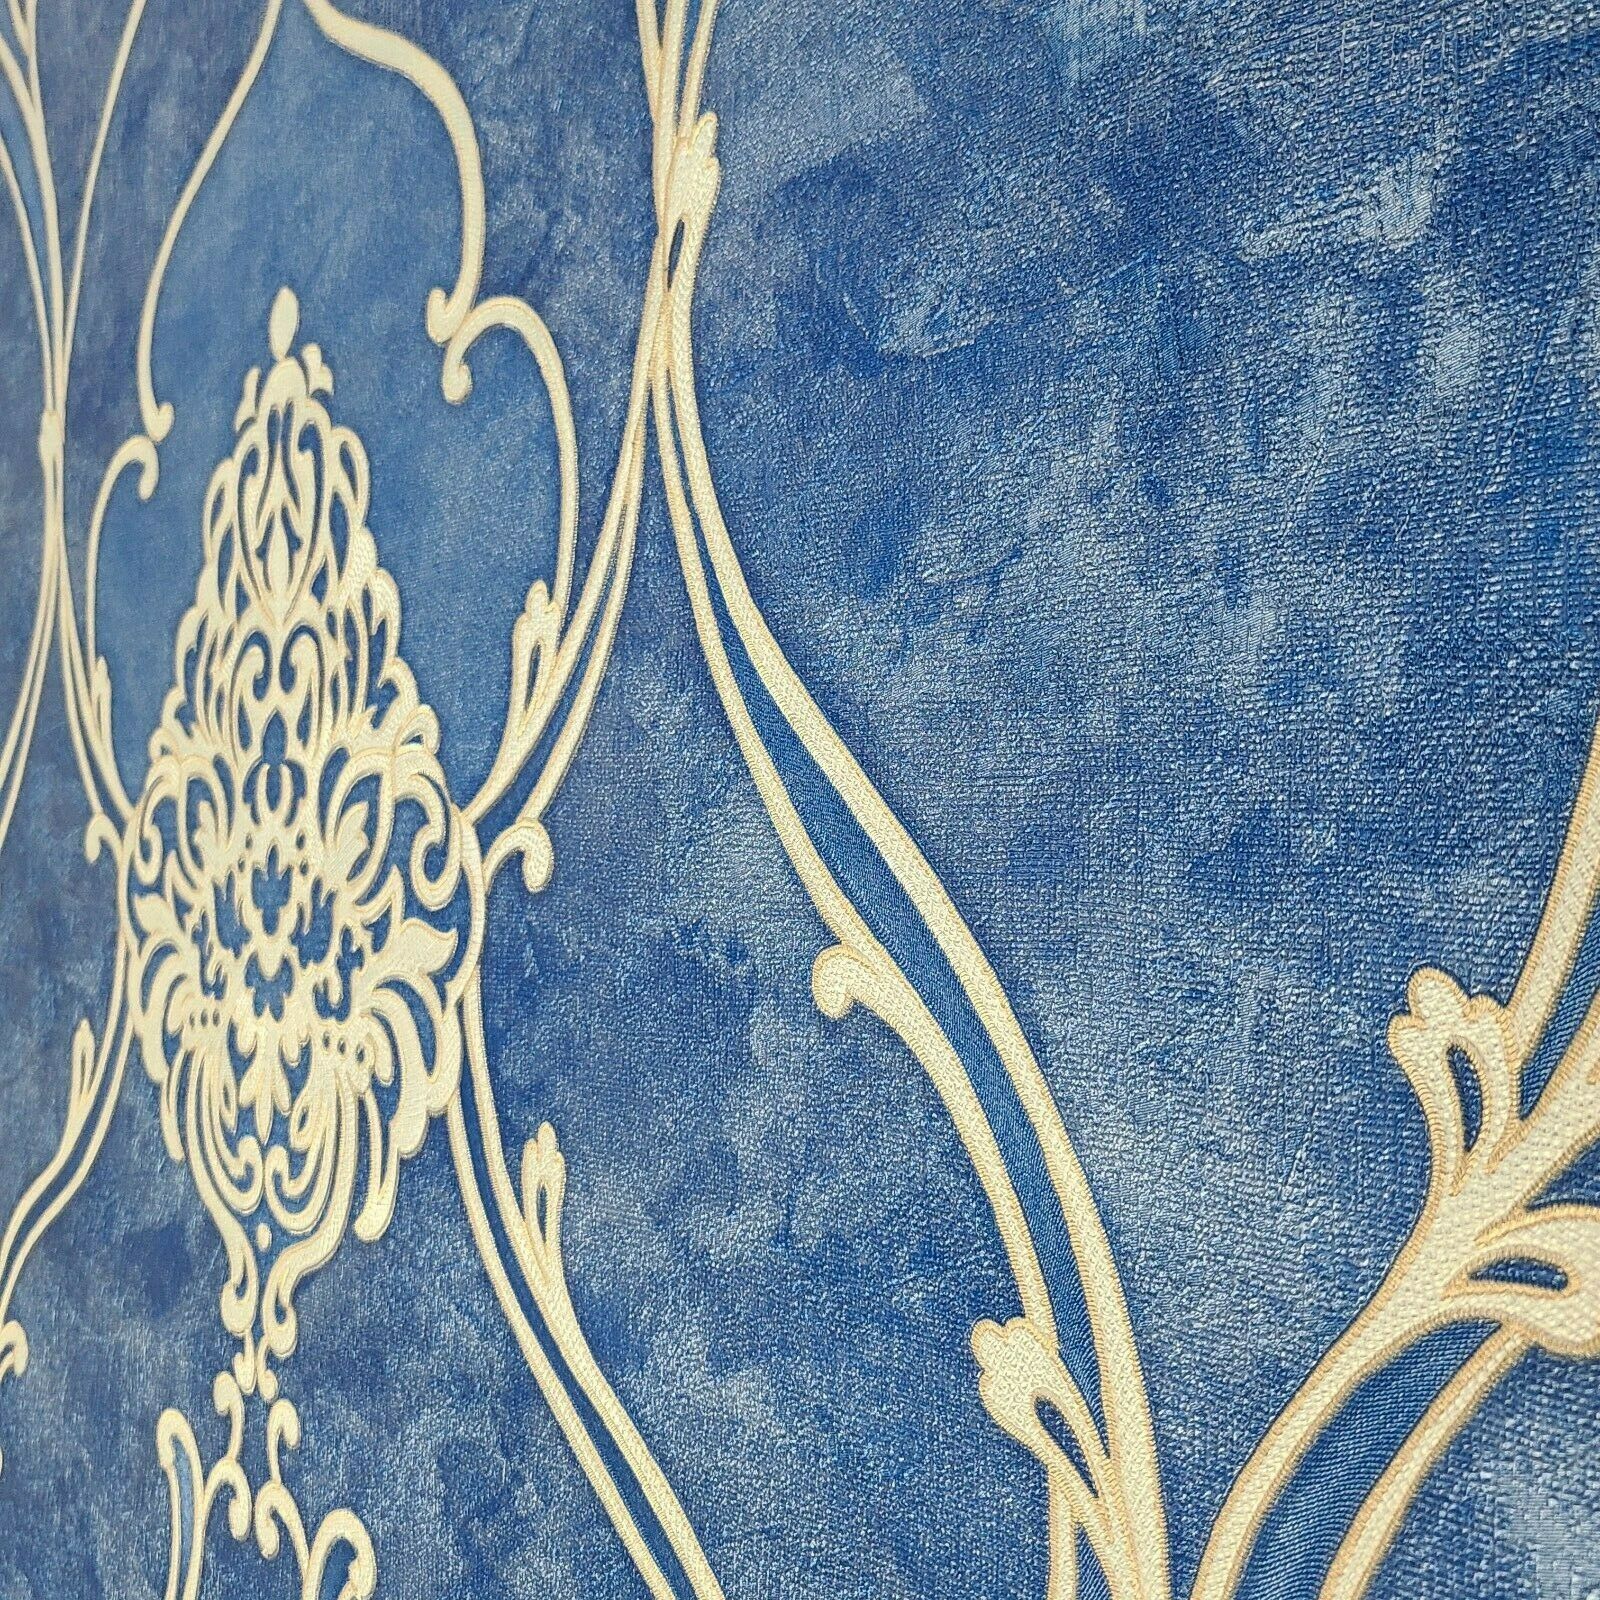 royal blue wallpaper designs